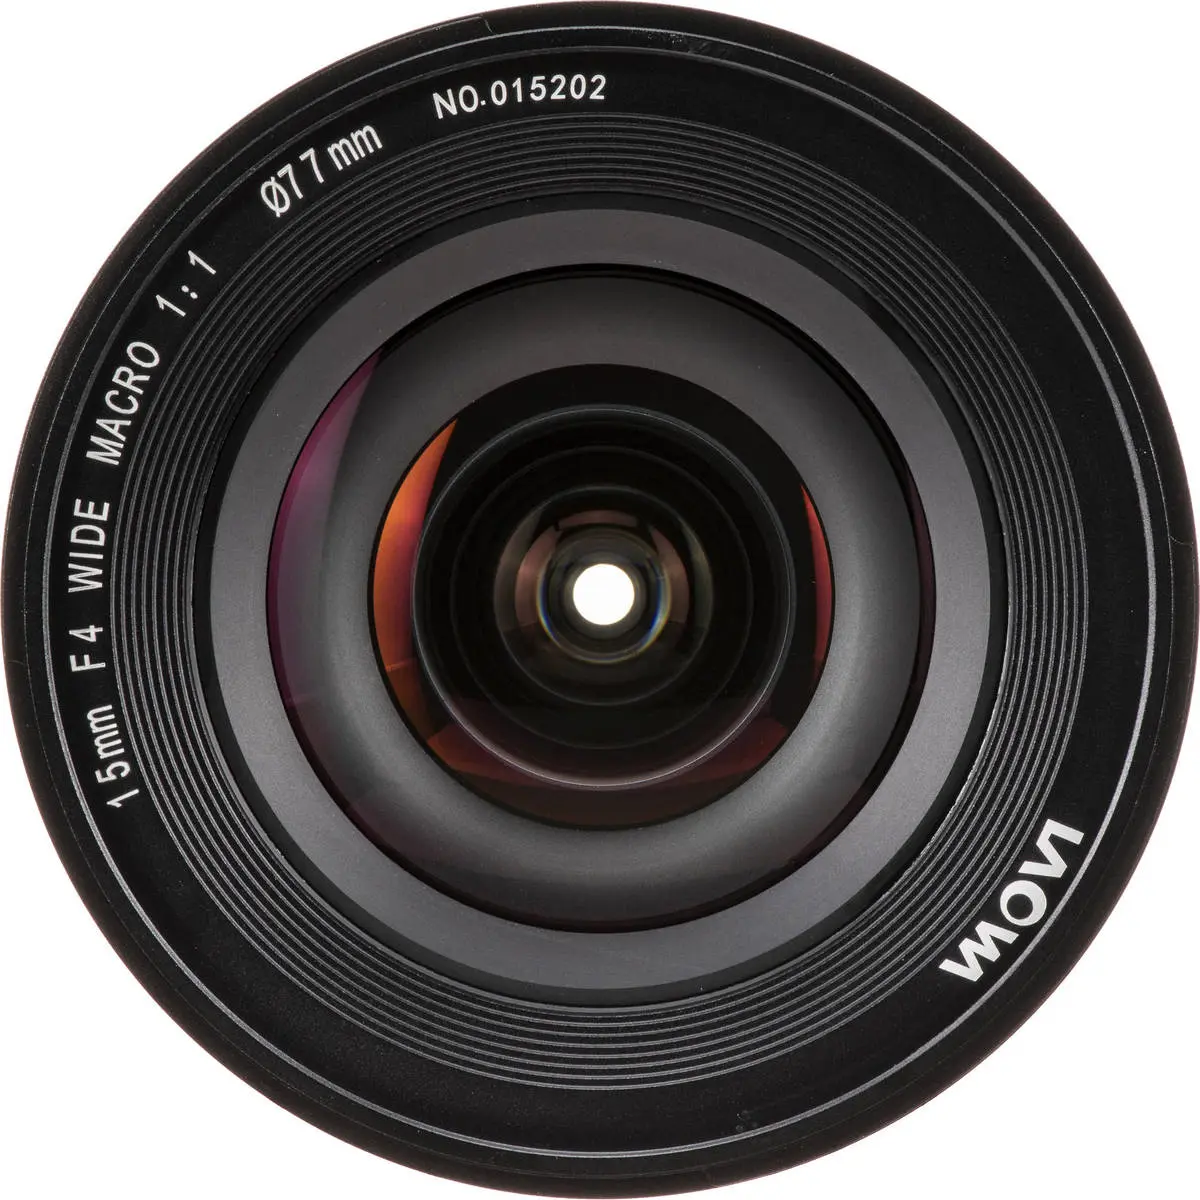 4. LAOWA Lens 15mm F/4 Wide Angel Macro (Nikon)